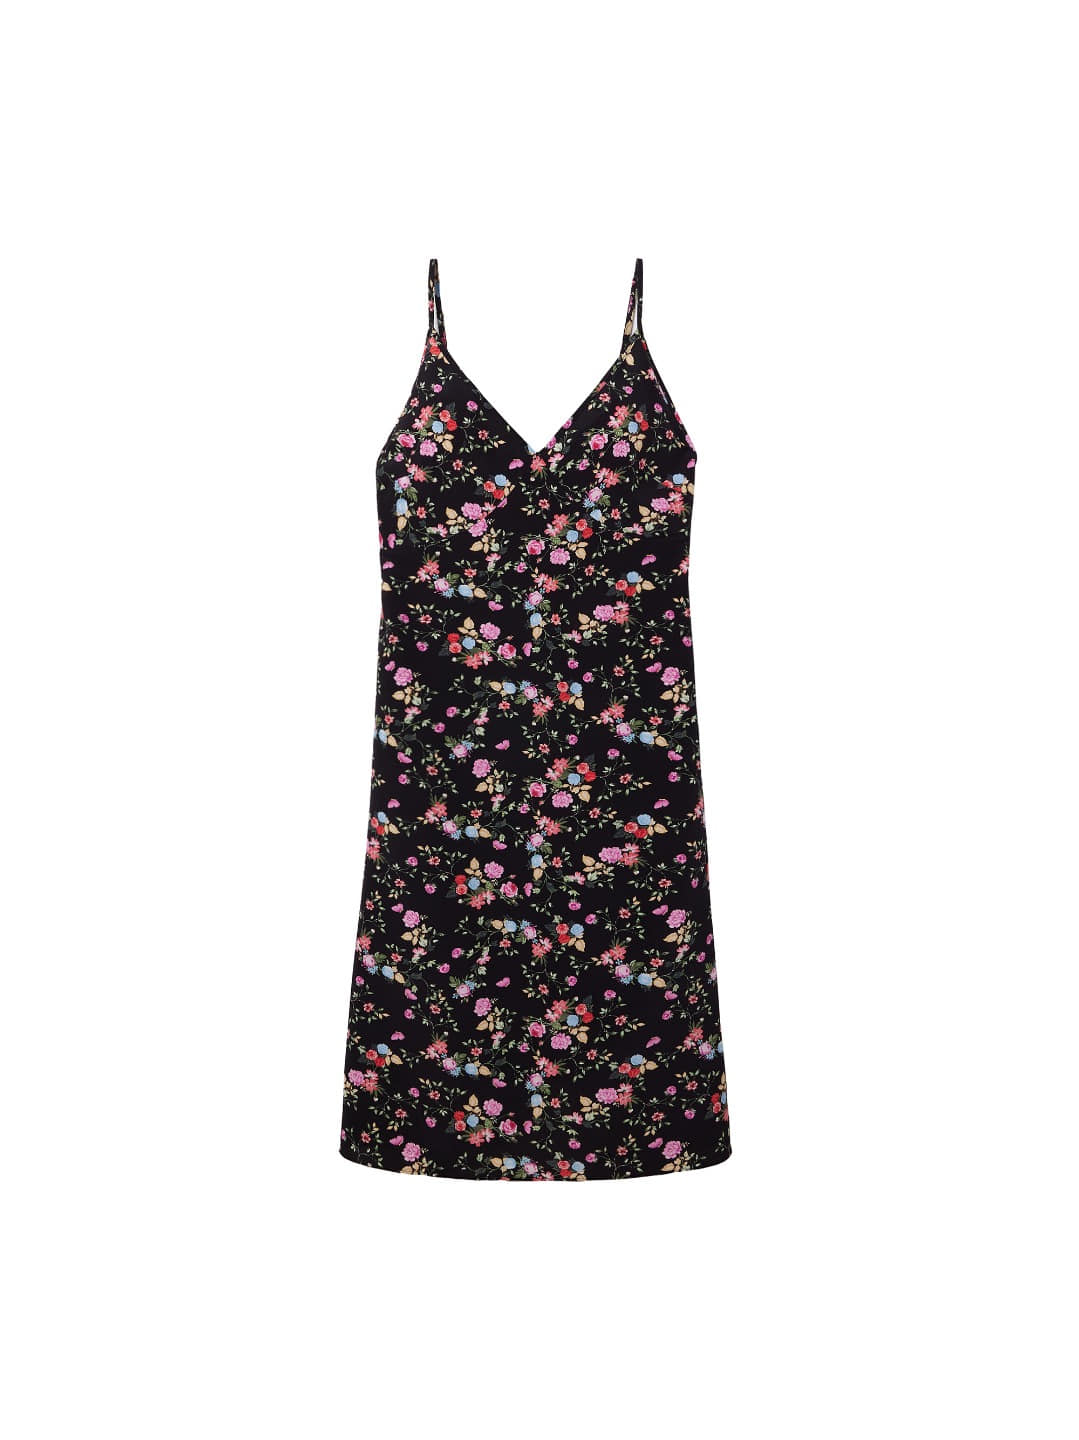 242. Floral Pattern Slip Dress / 플로럴 패턴 슬립 드레스